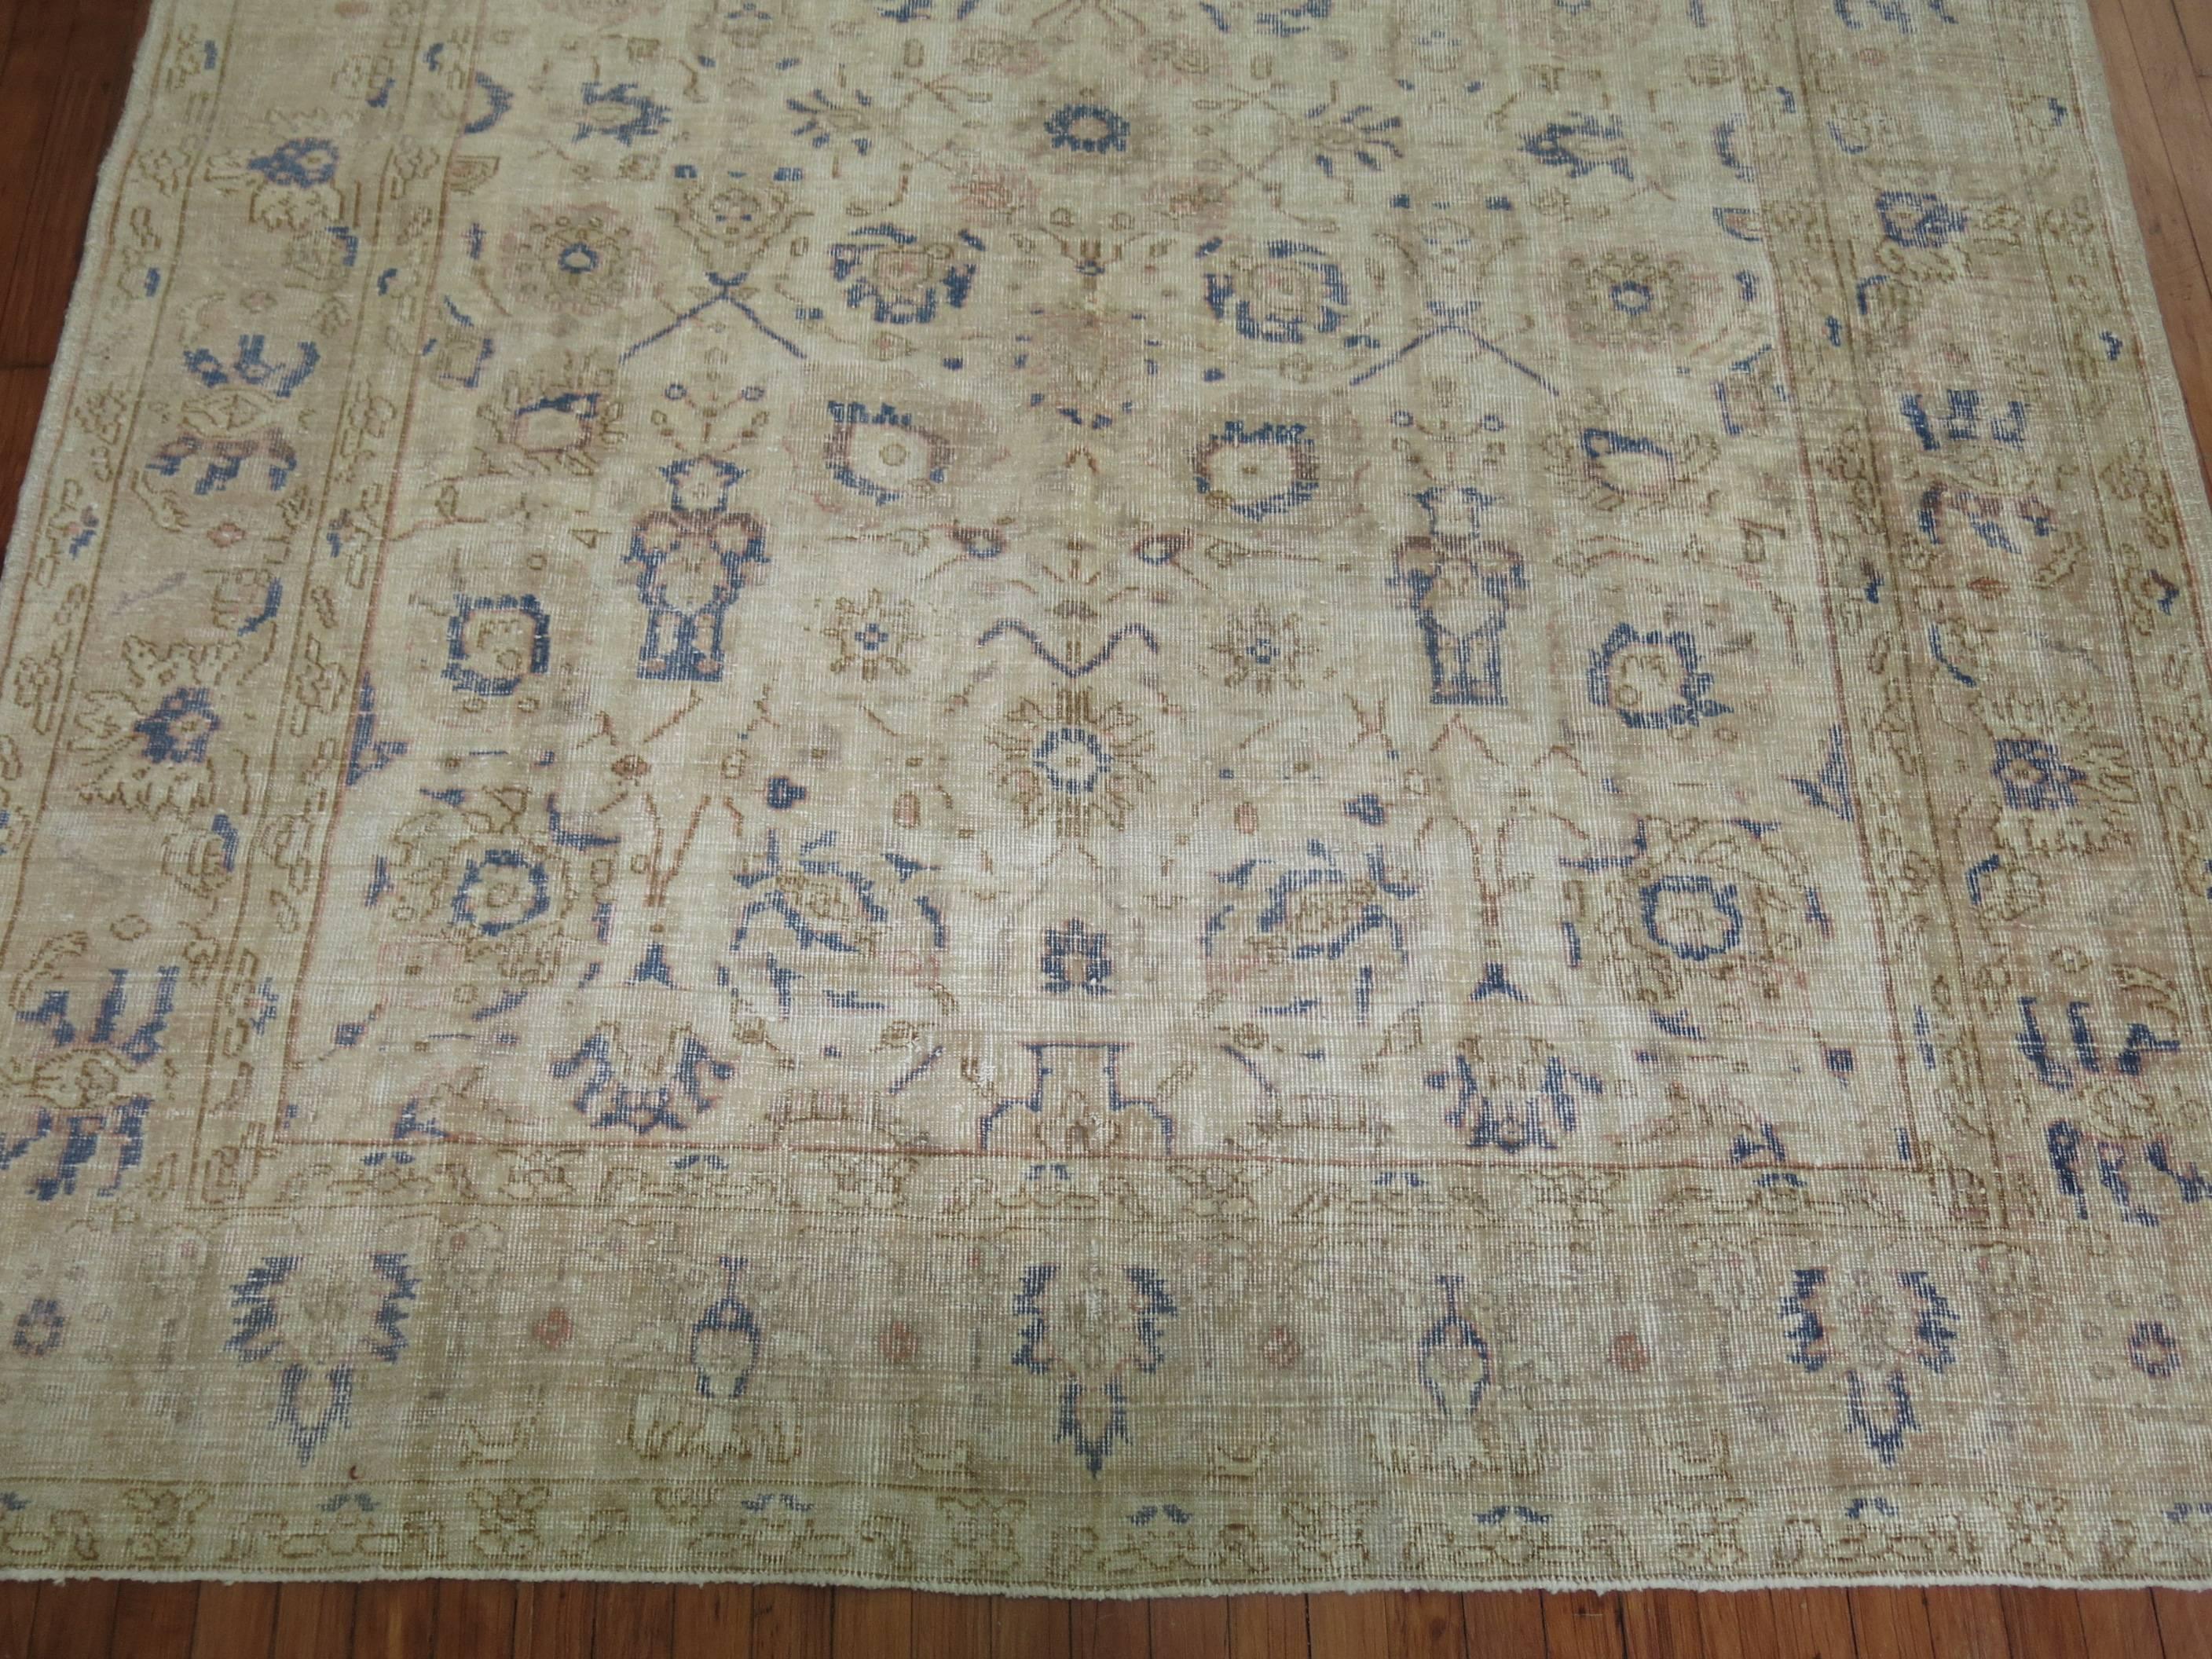 One-of-a-kind worn midcentury predominantly white Turkish rug.

6'8'' x 9'4''